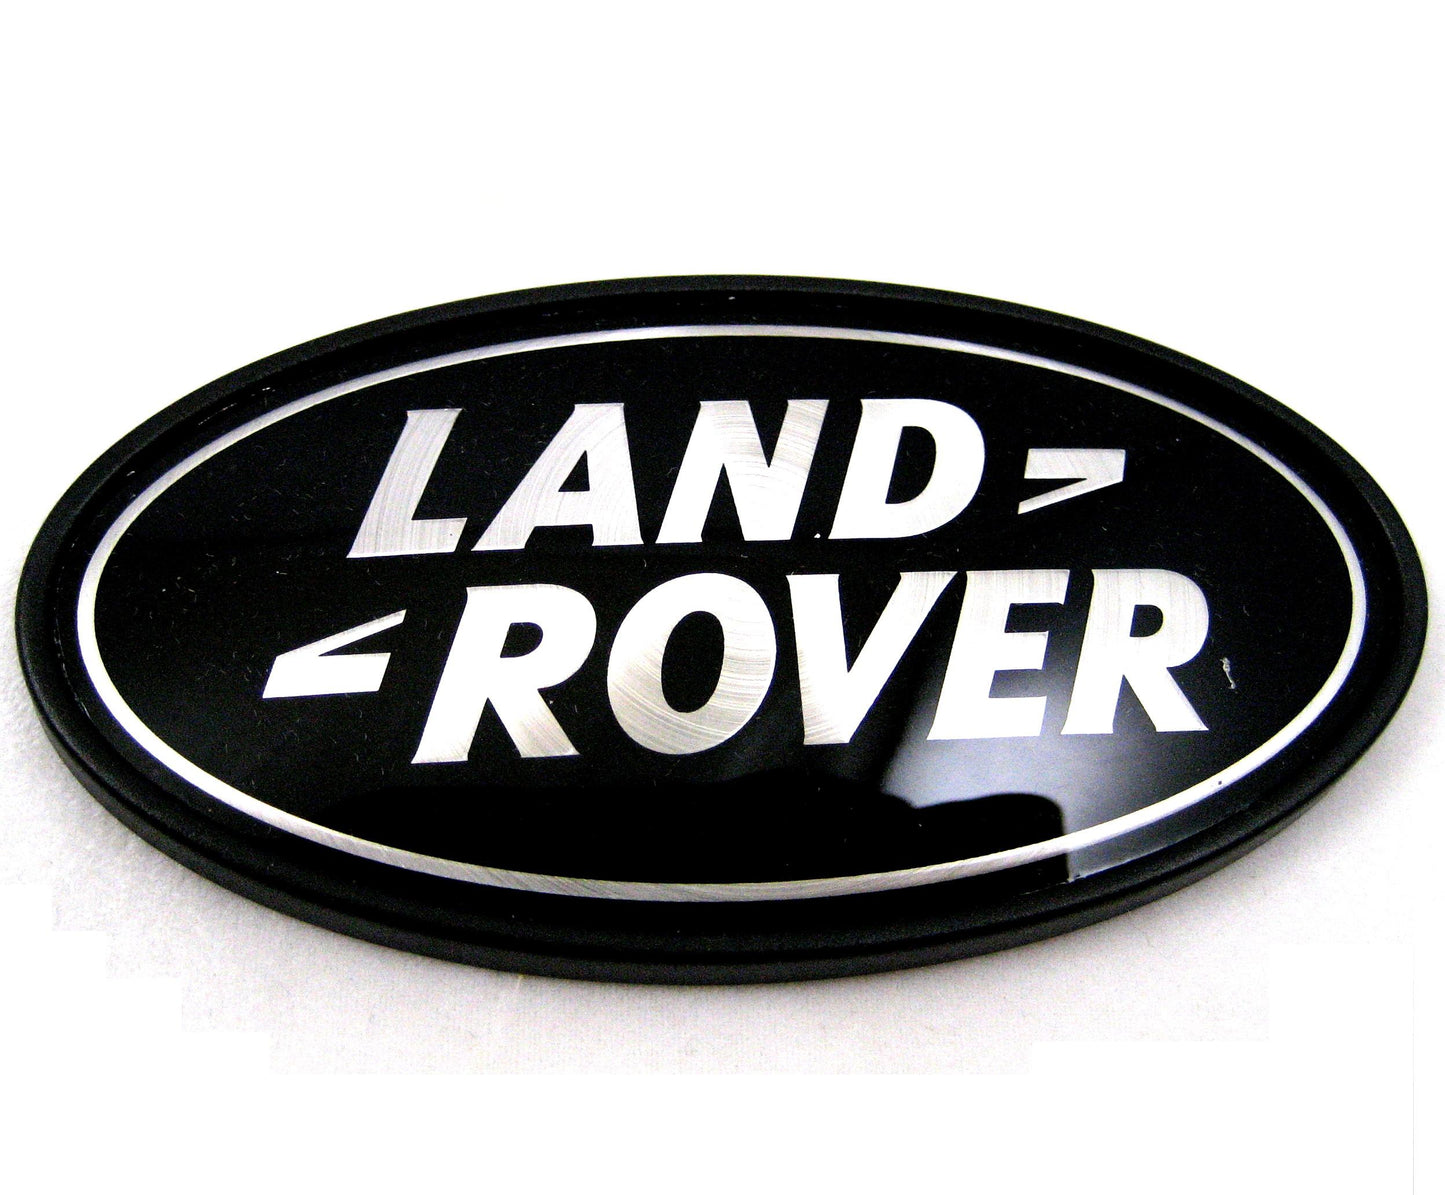 Genuine Rear Tailgate Badge - Black & Silver - for Land Rover Freelander 1